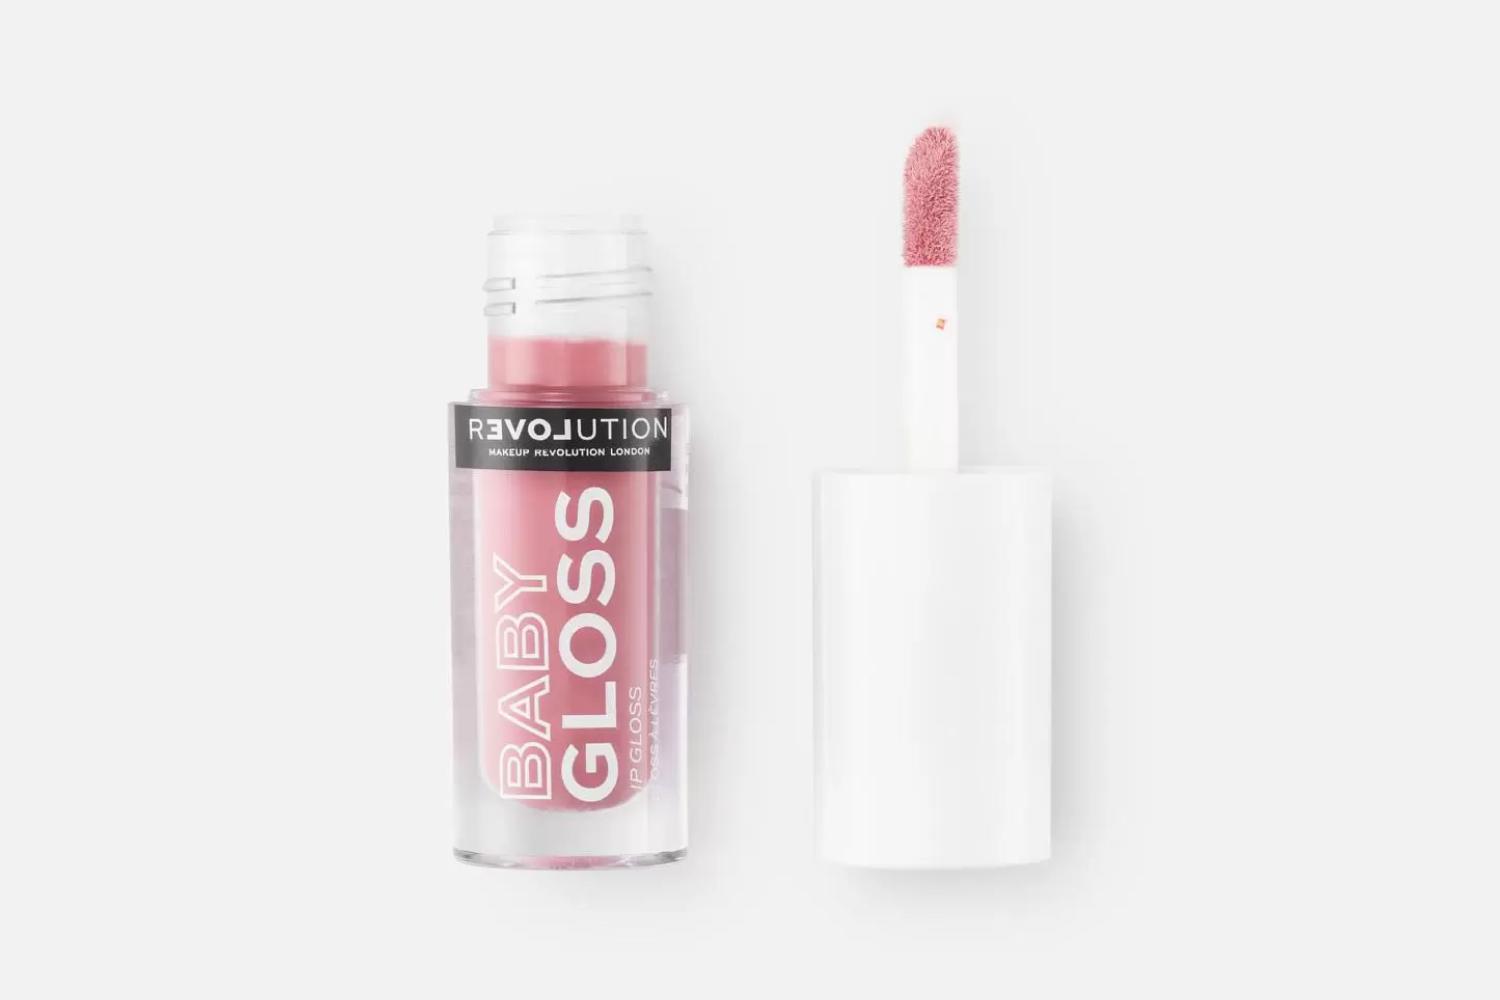 Блеск для губ Baby gloss lip, оттенок Sweet, Revolution Relove, 319 руб. (&laquo;Подружка&raquo;)